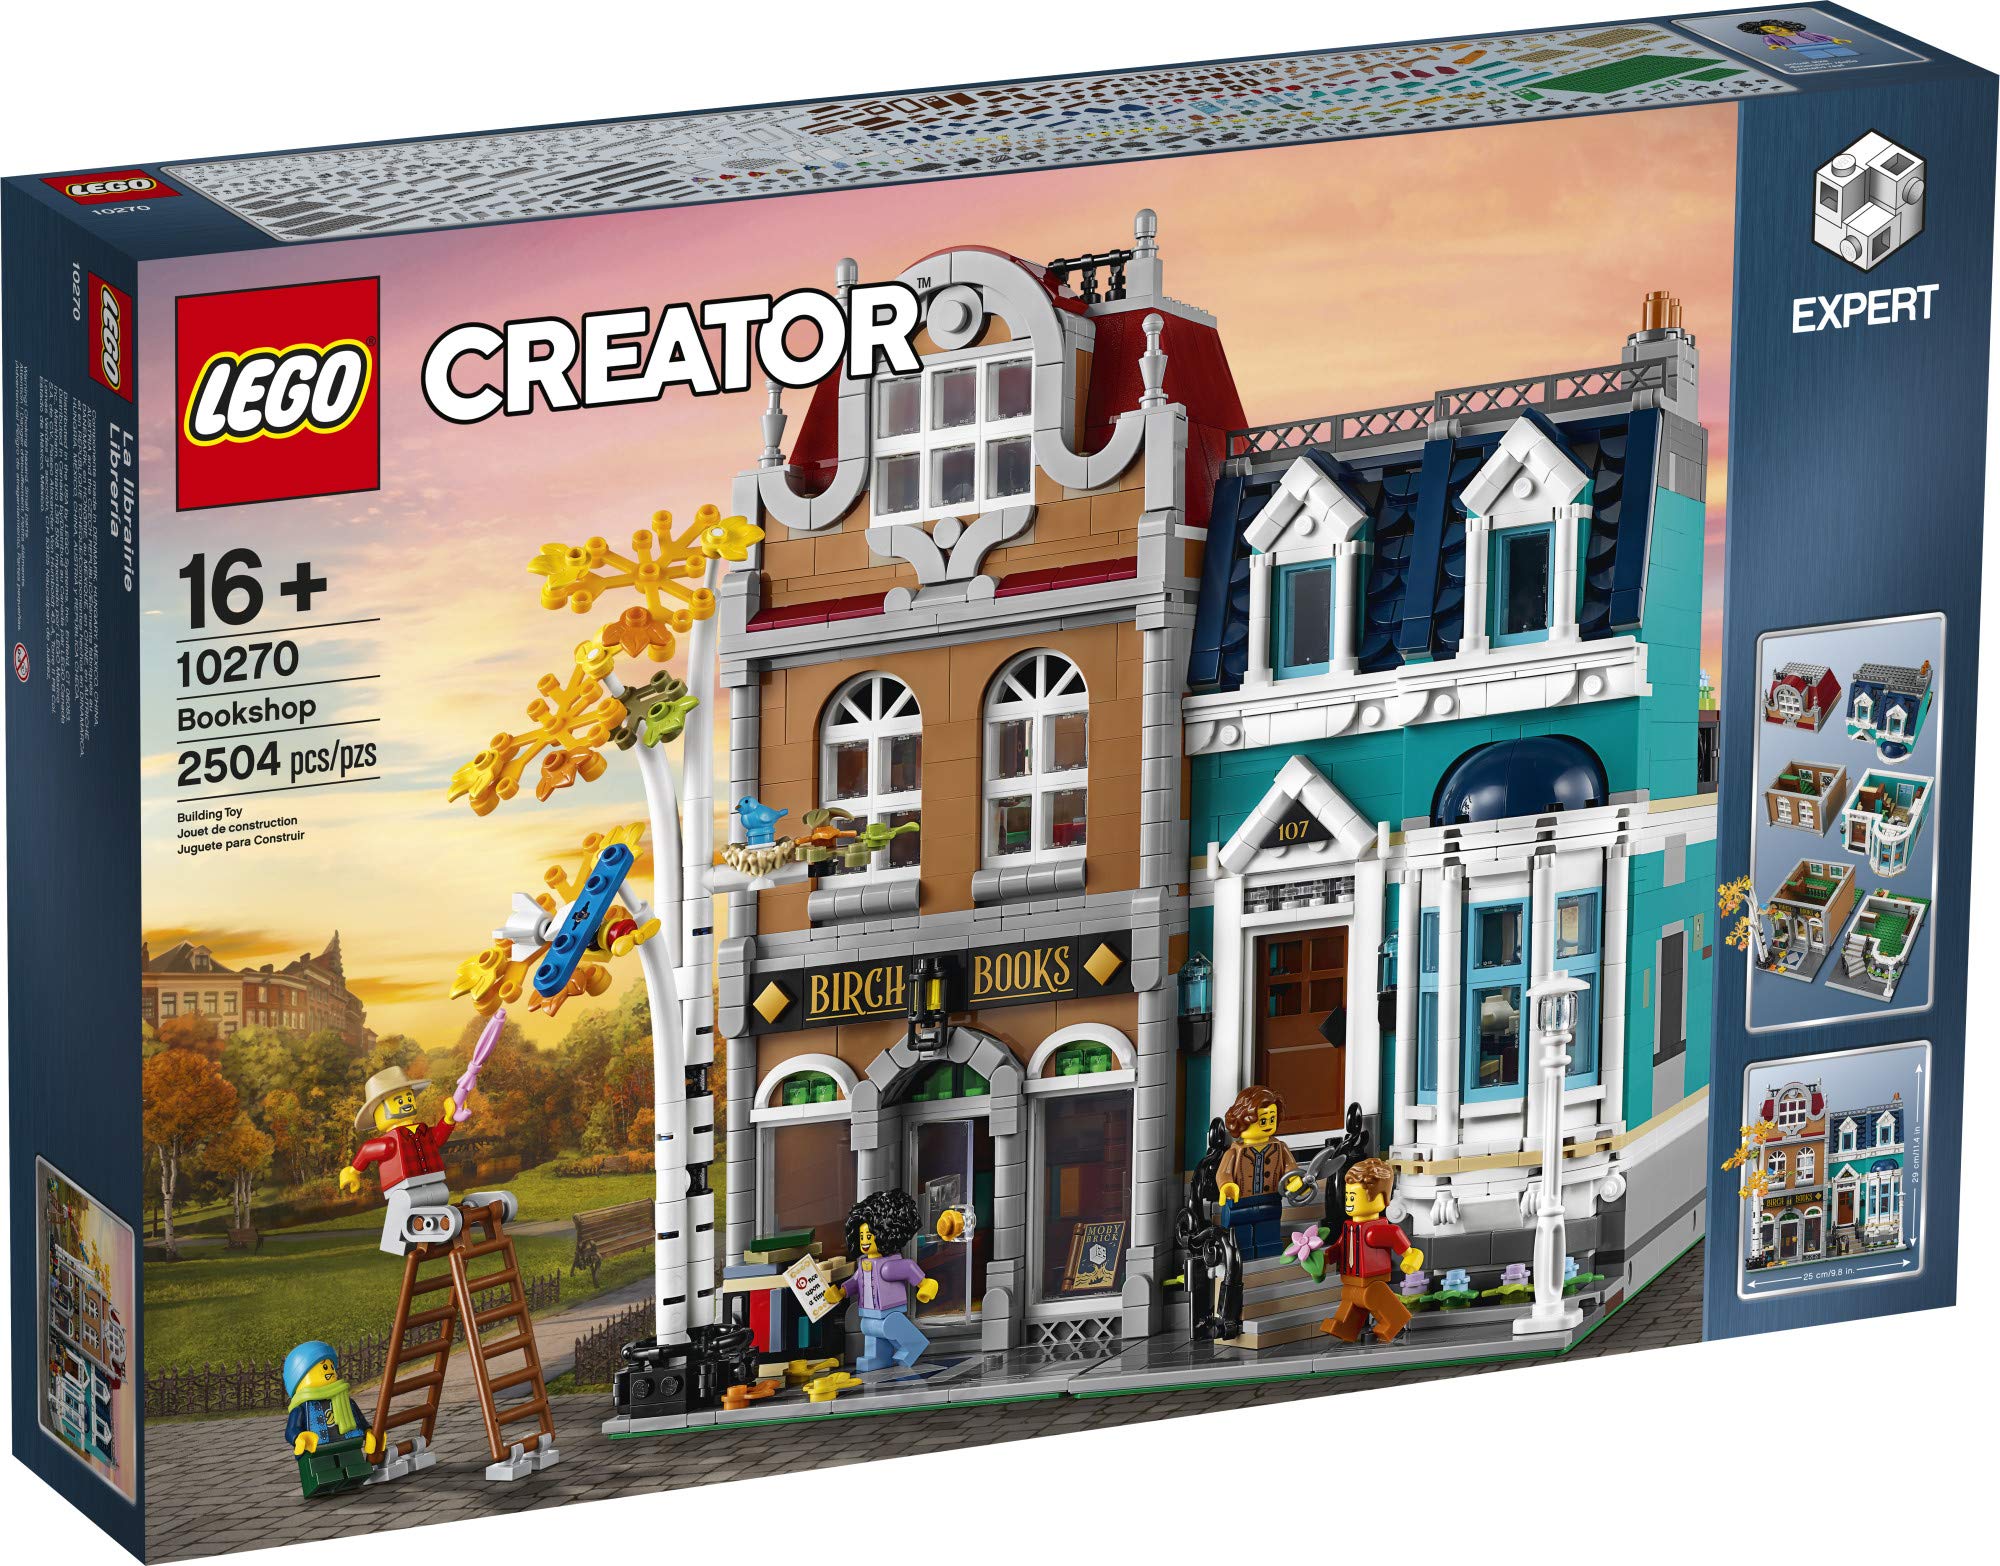 LEGO Creator Expert Bookshop 10270 Modular Building Kit, Big Set and Collectors Toy for Adults, (2,504 Pieces)